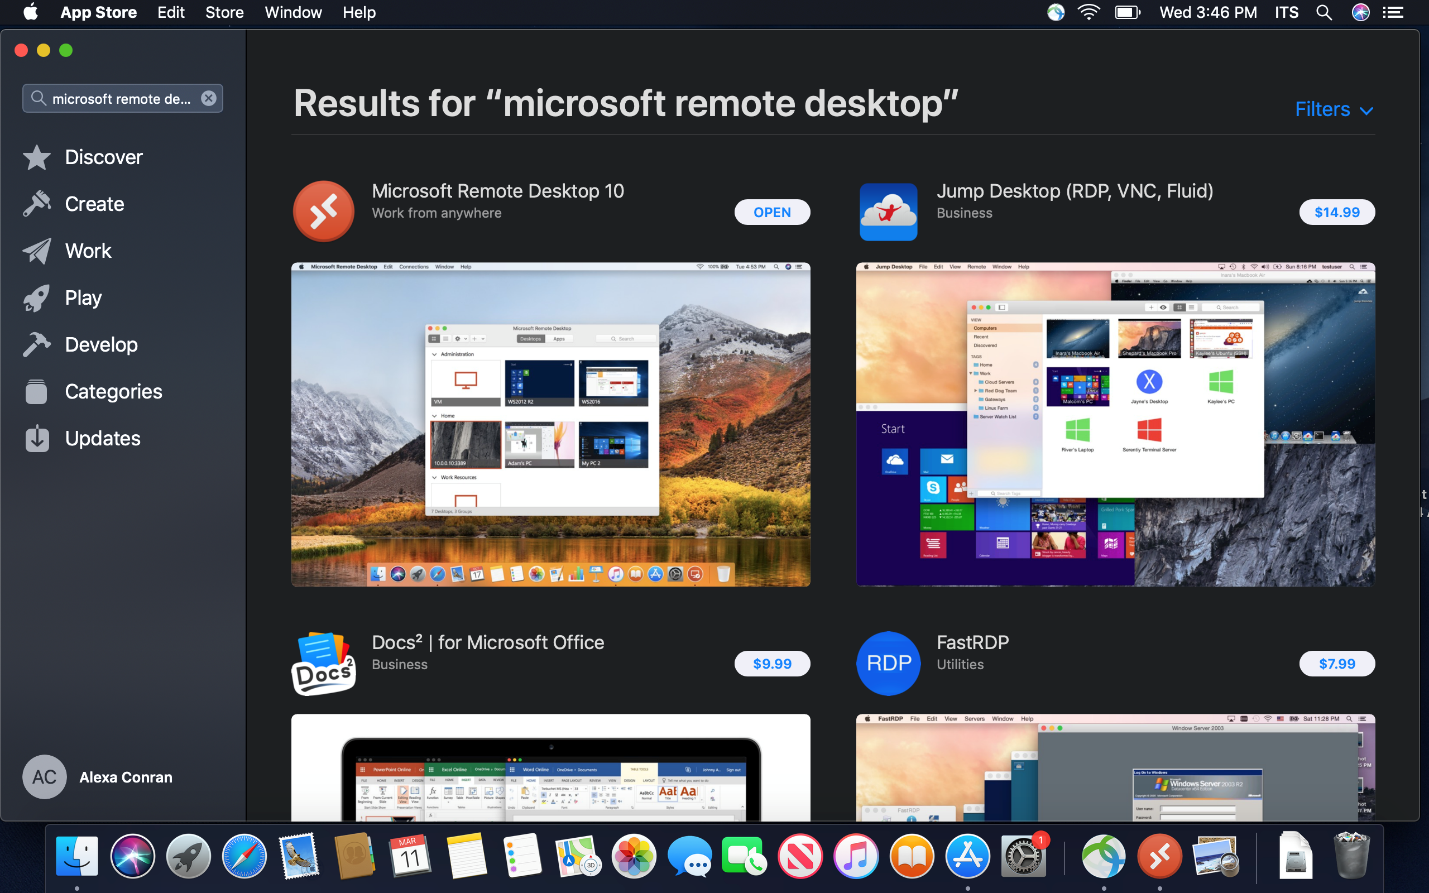 OnlineGDB - Desktop App for Mac, Windows (PC), Linux - WebCatalog